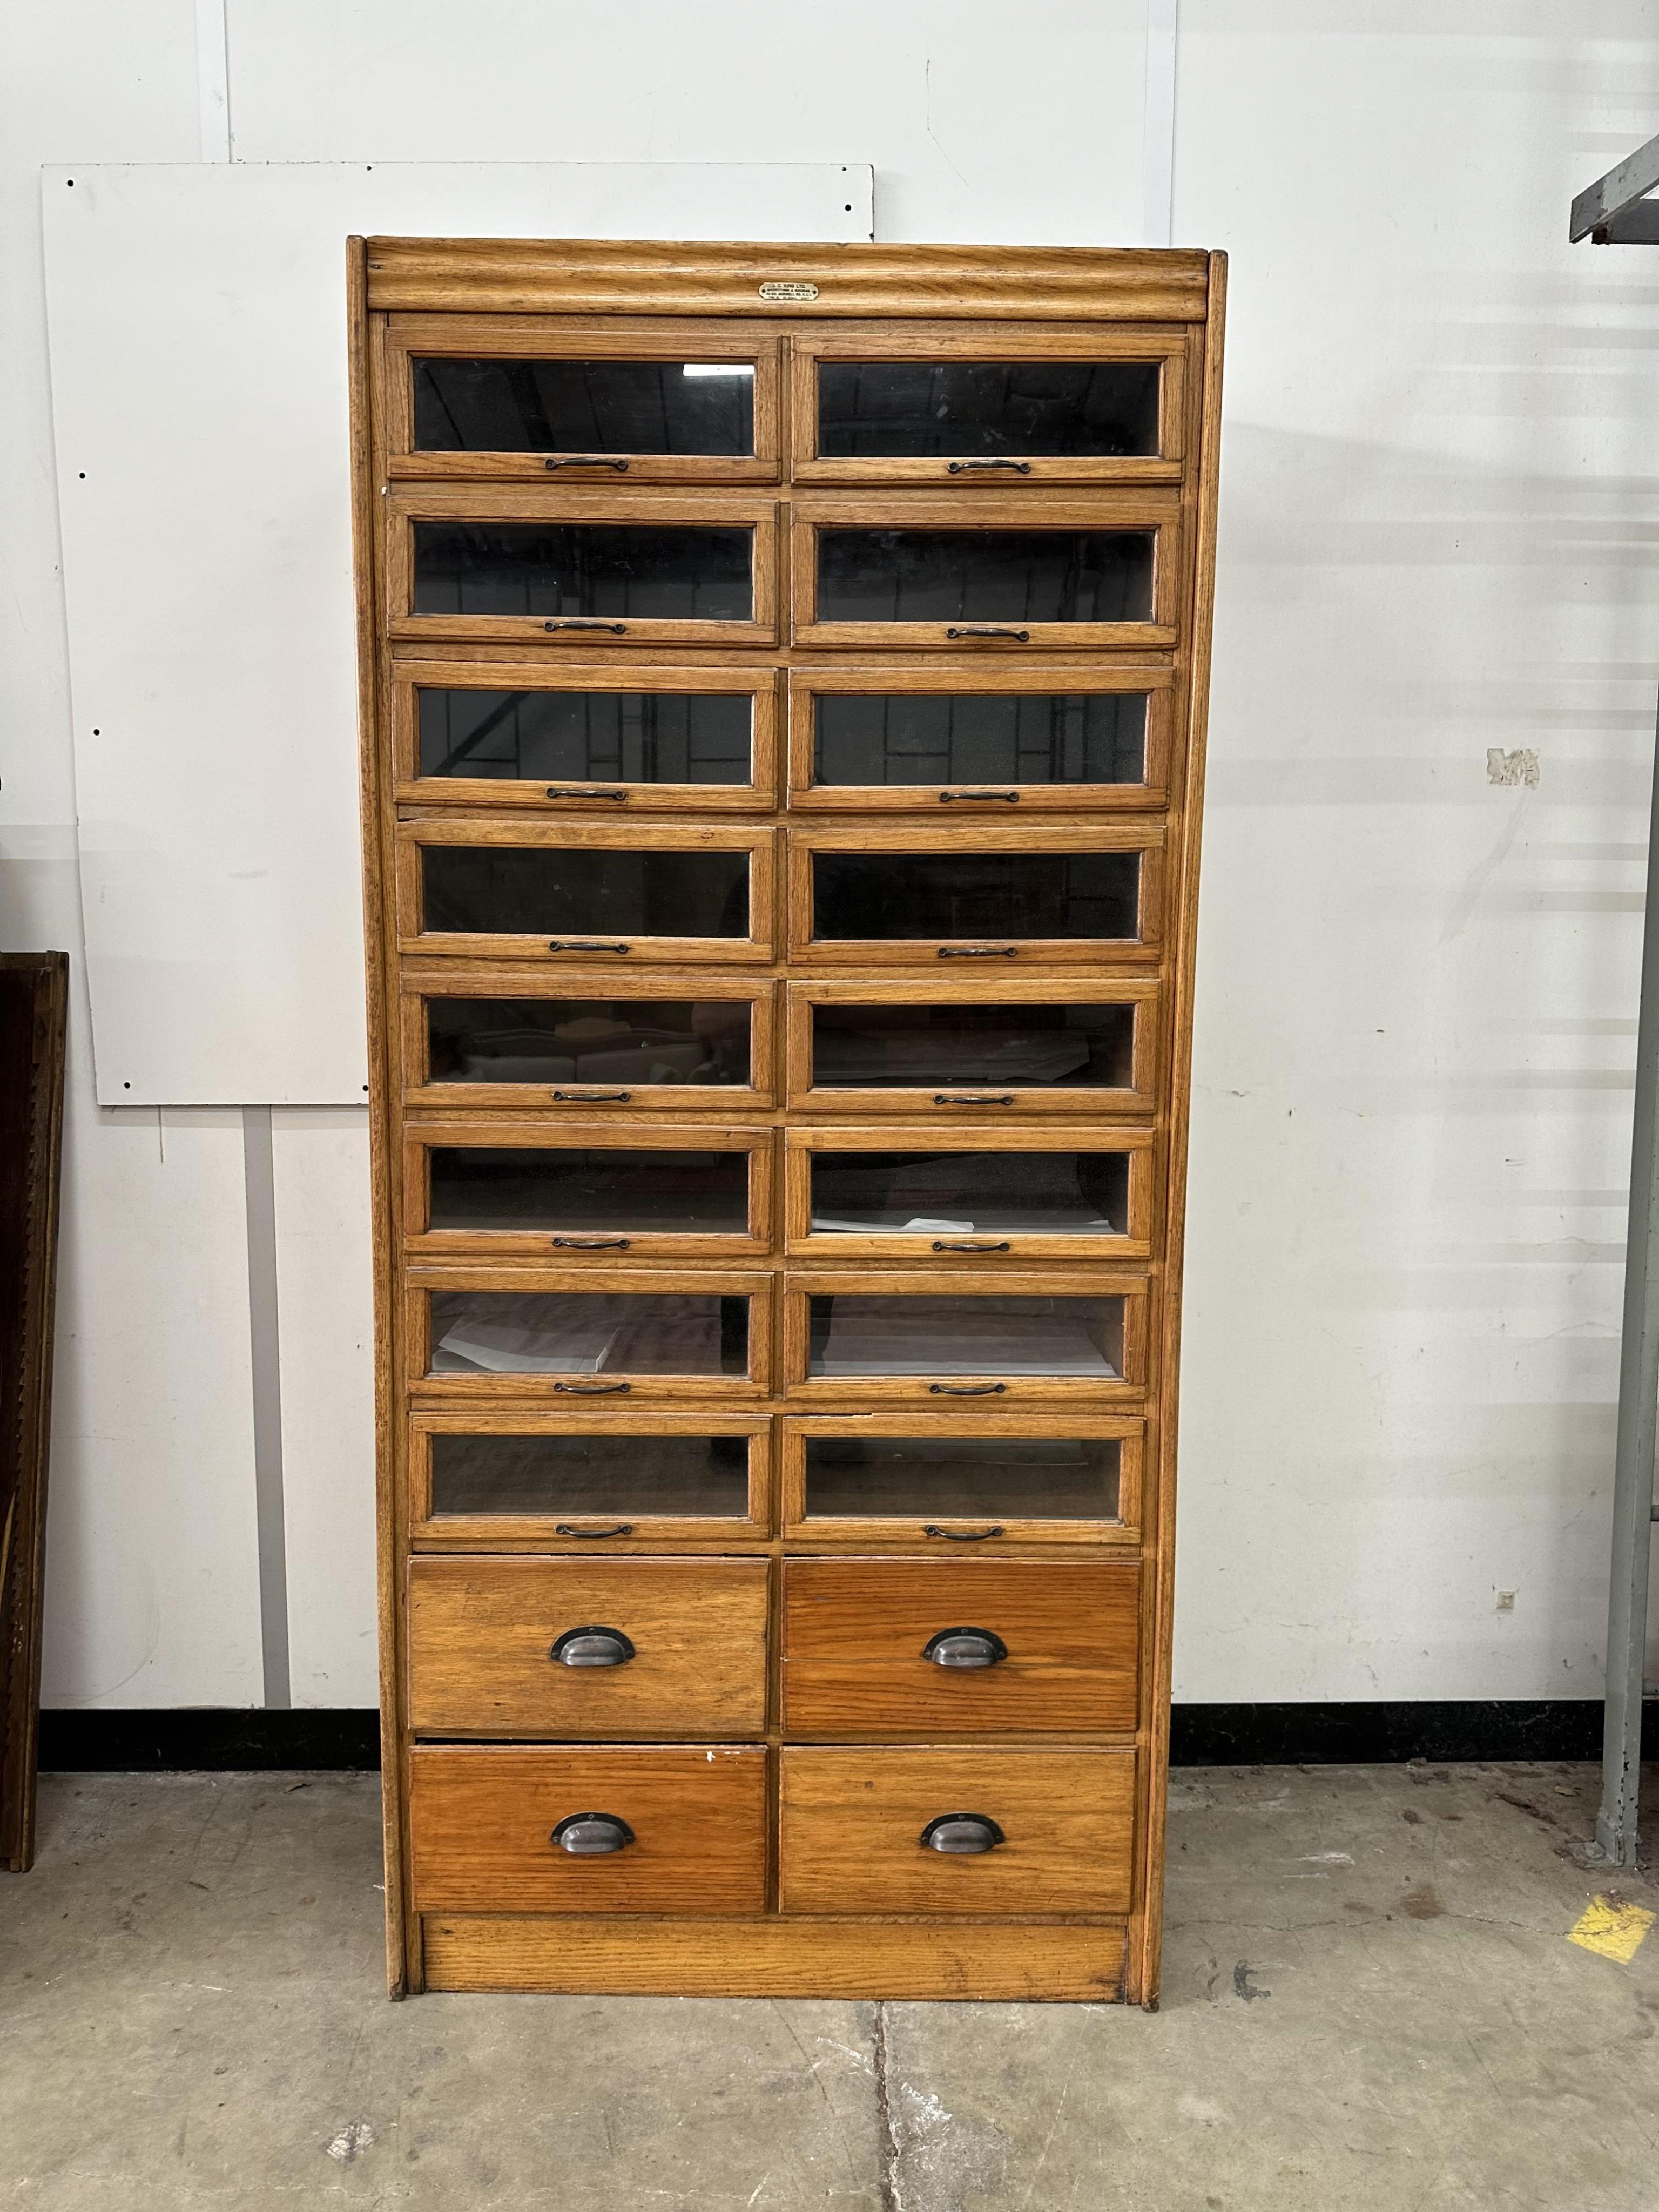 A mid century oak twenty drawer haberdashery cabinet, width 91cm, depth 49cm, height 198cm. Condition - good